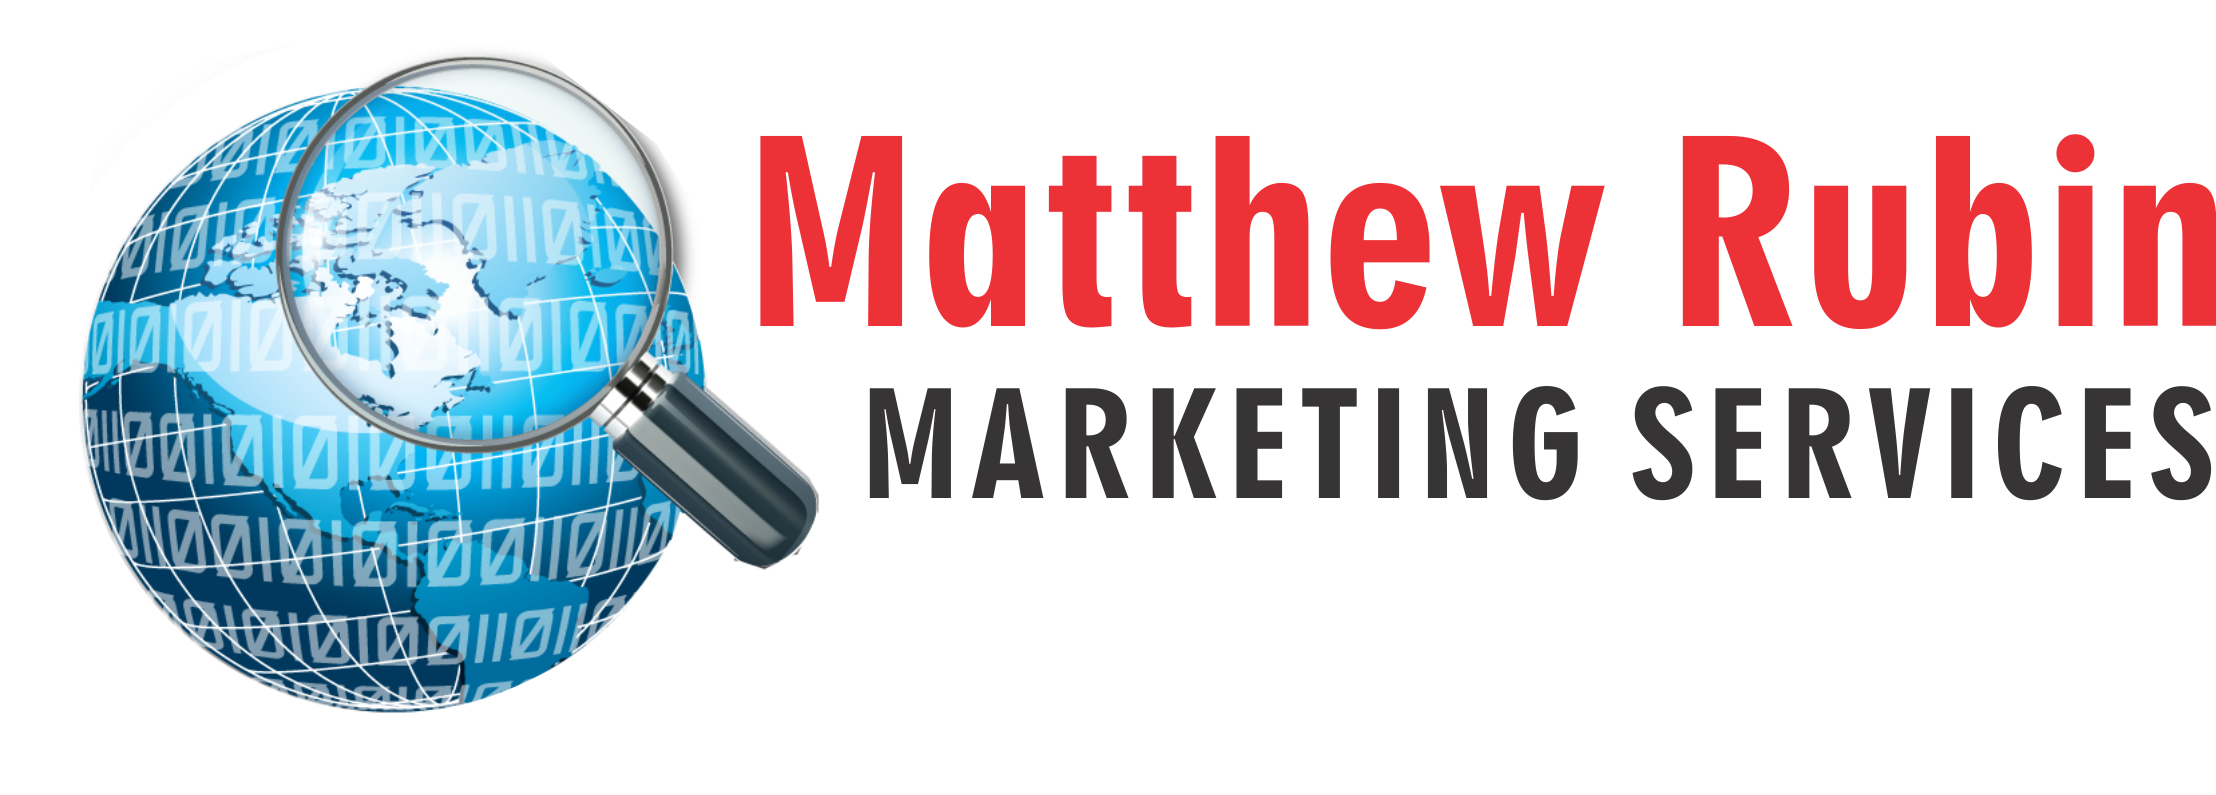 Matthew Rubin Marketing Services